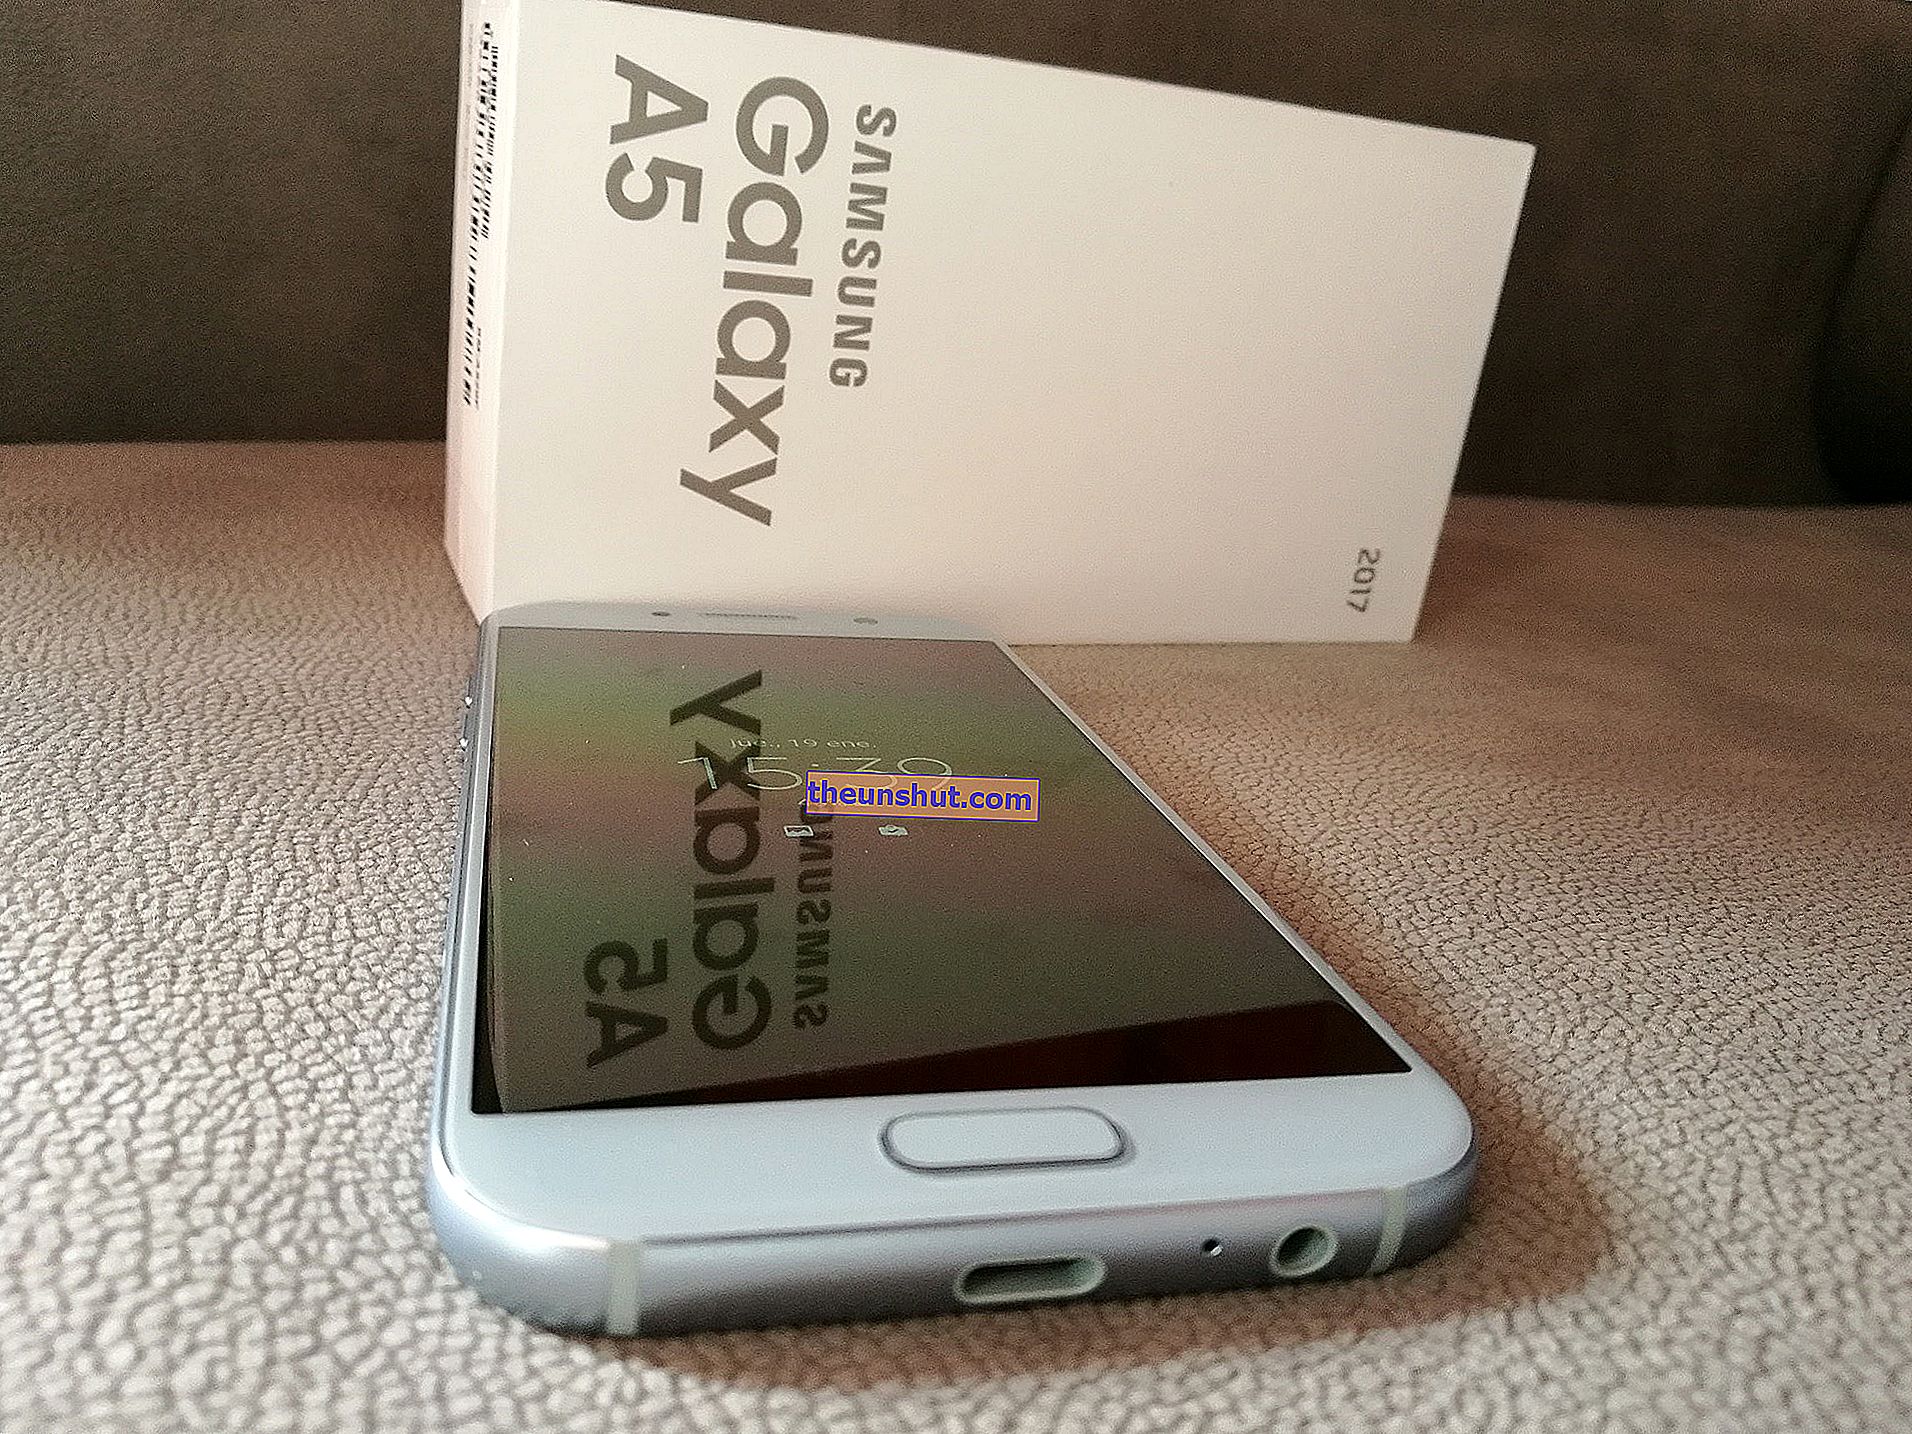 Samsung Galaxy A5 2017, vi har testet den